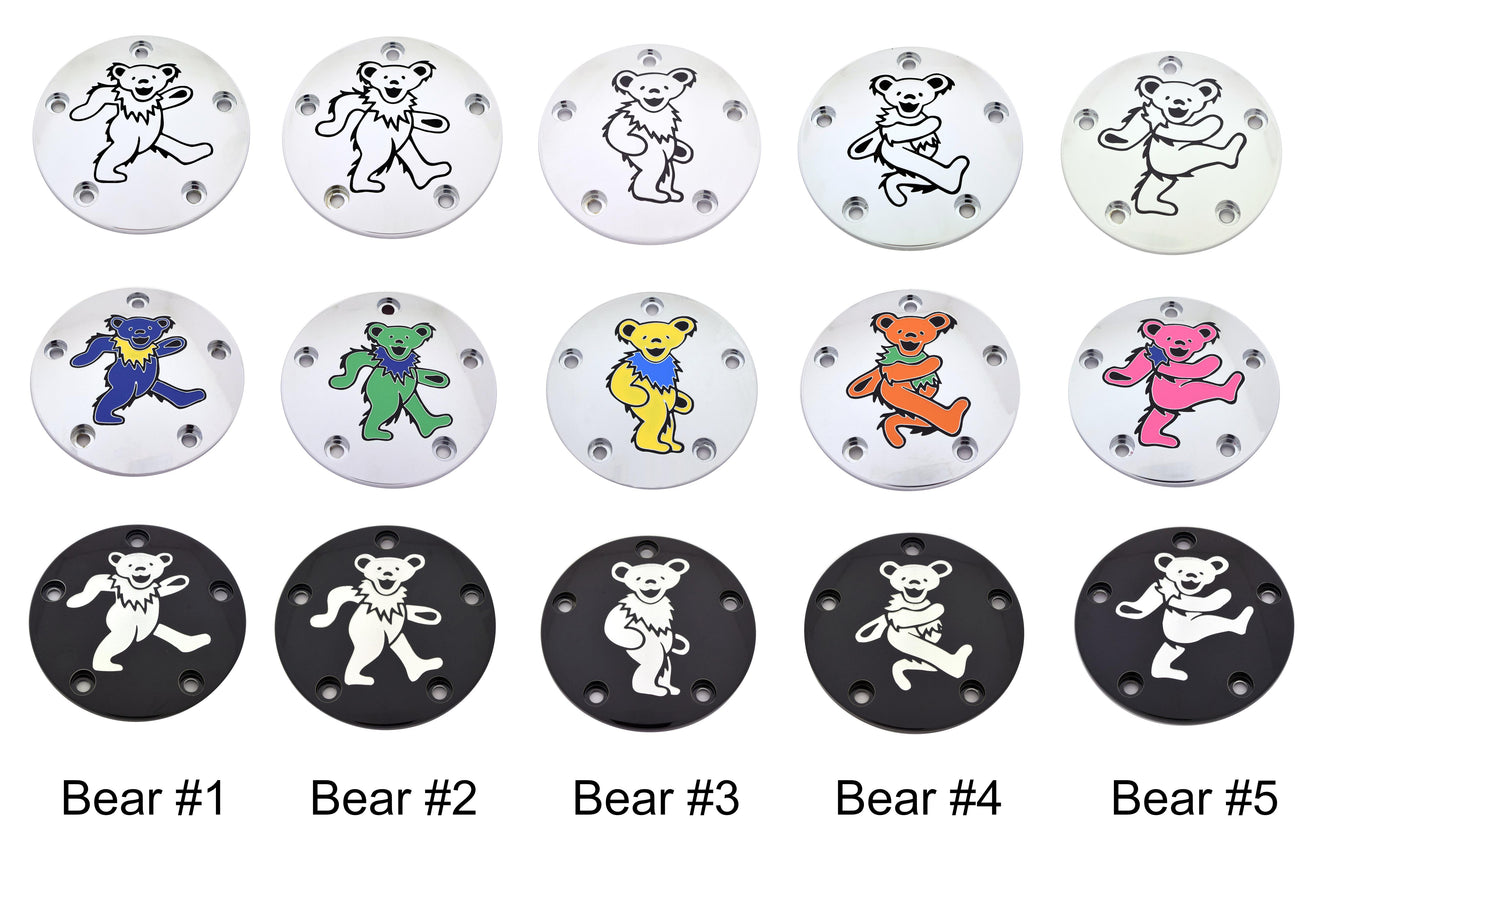 Individual Bears